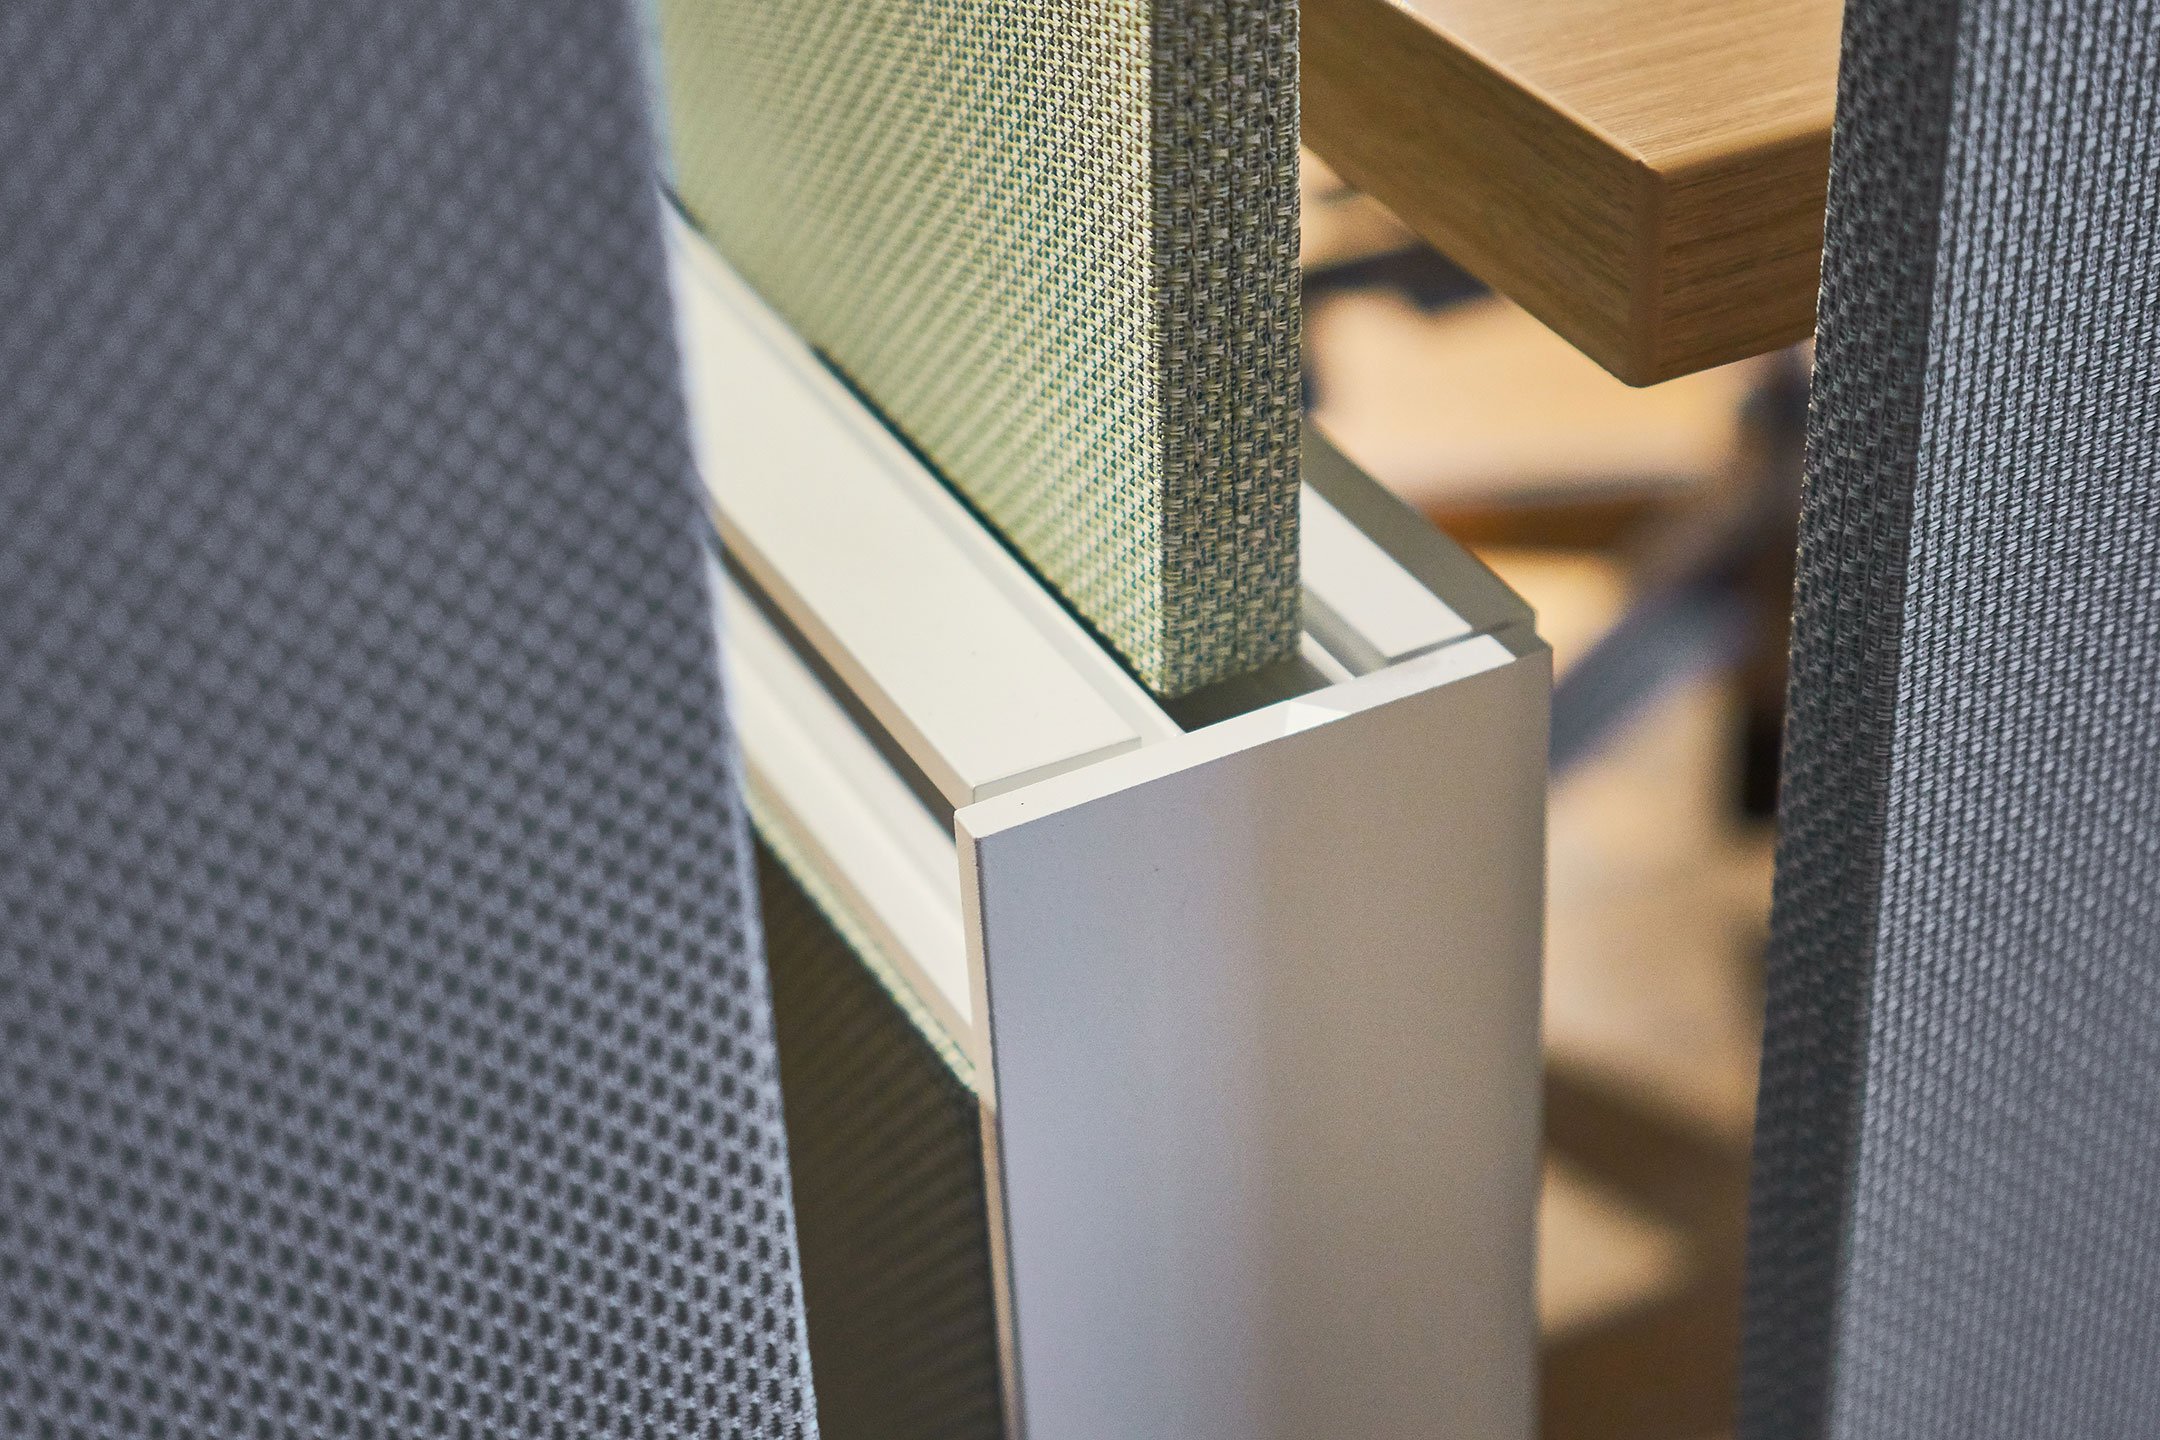 Haworth Compose Beam Workspace divider in fields fabrics